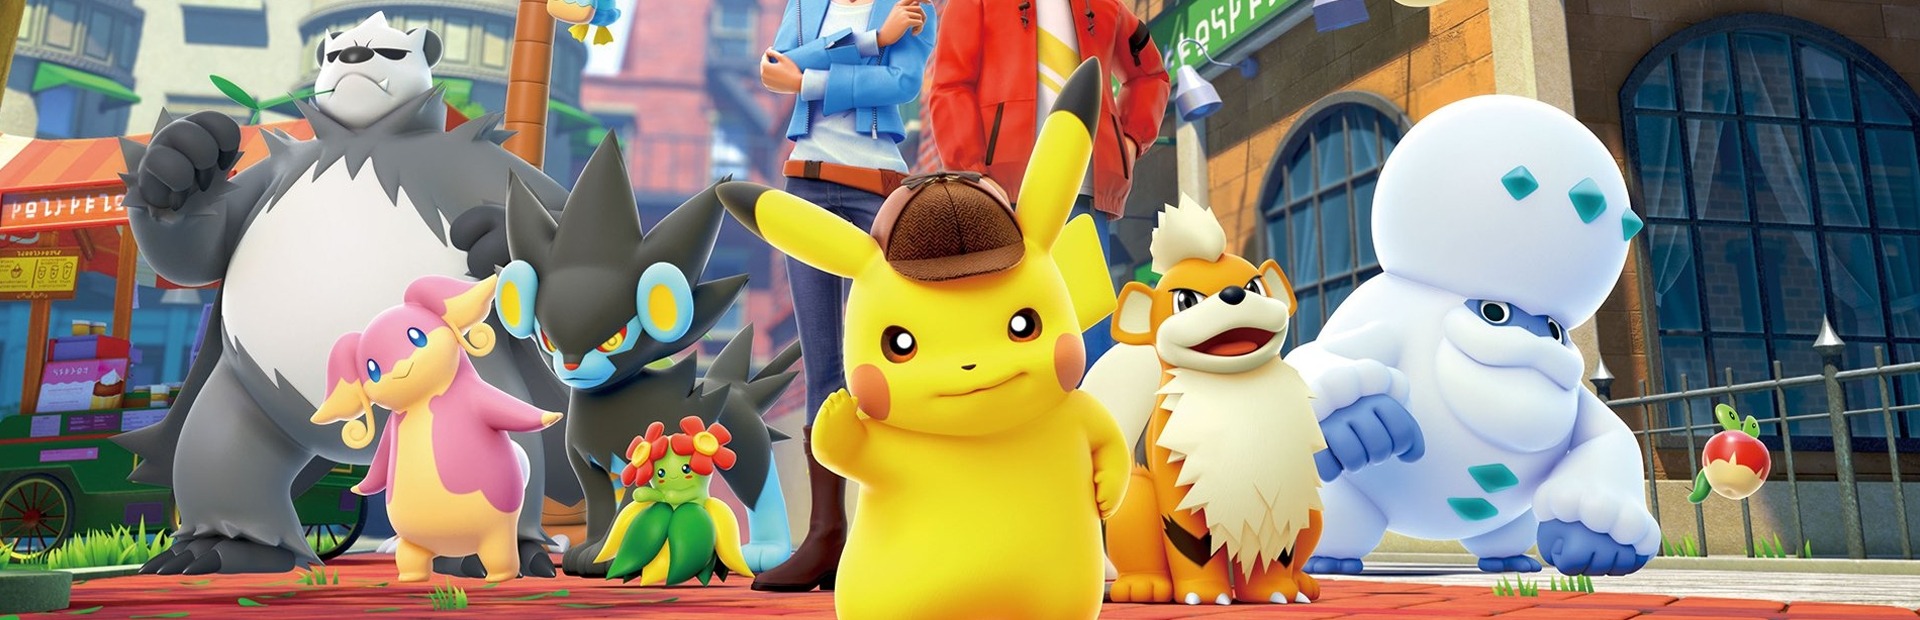 Detective Pikachu: El regreso Switch